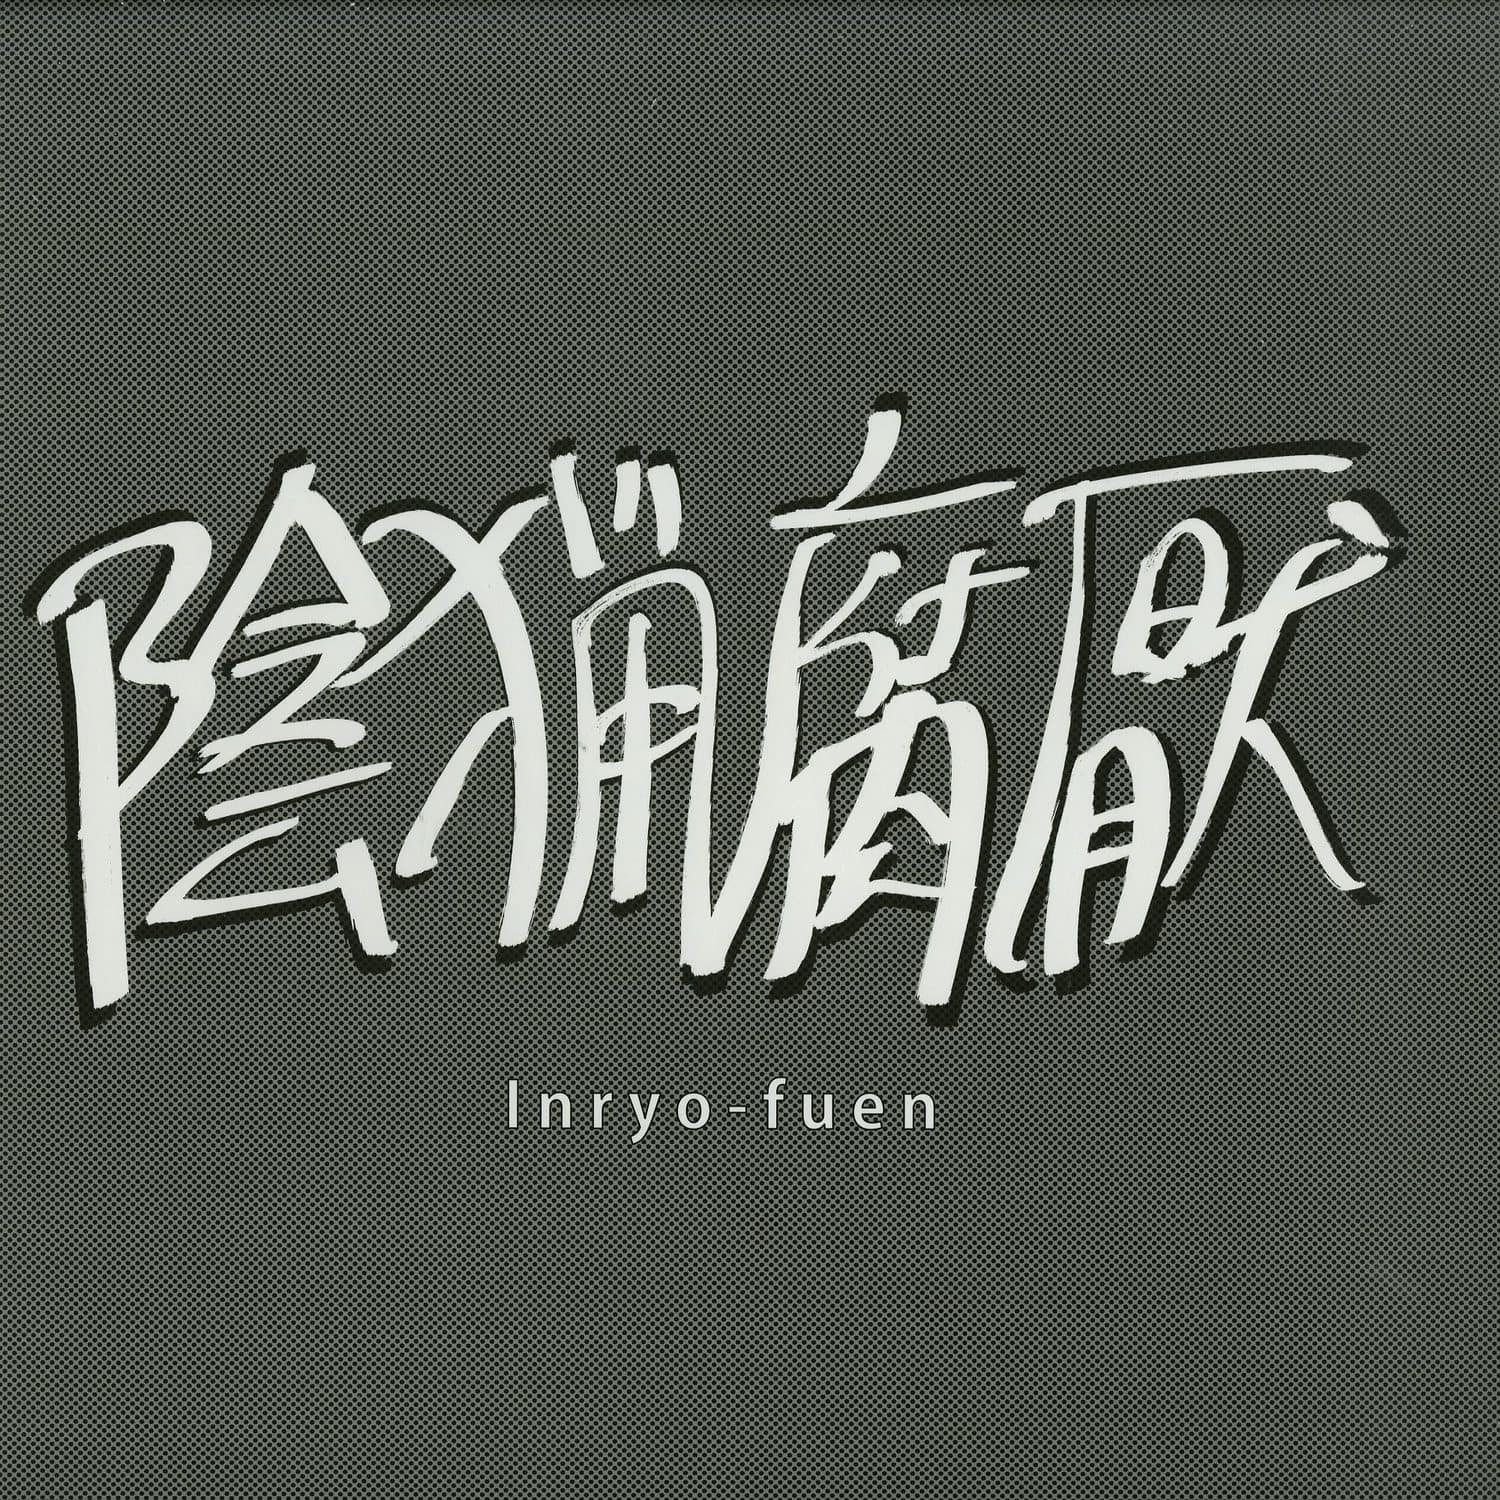 Inryo-Fuen - EARLY WORKS 1980-82 